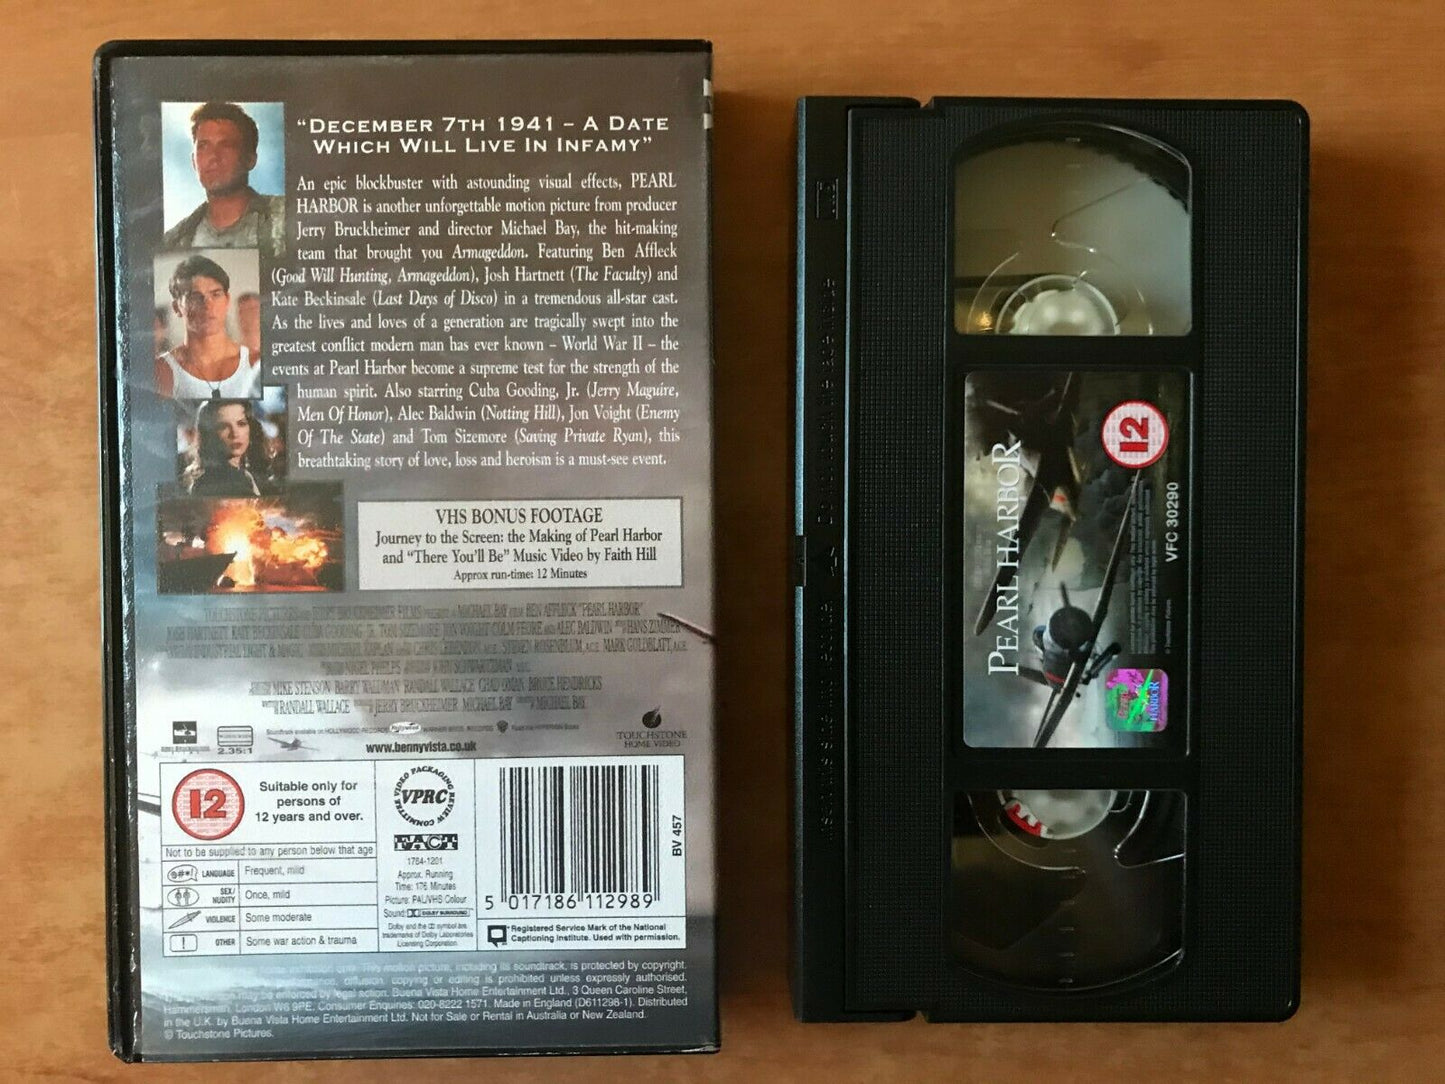 Pearl Harbor (2001); [Michael Bay]: Romantic War Drama - Ben Affleck - Pal VHS-